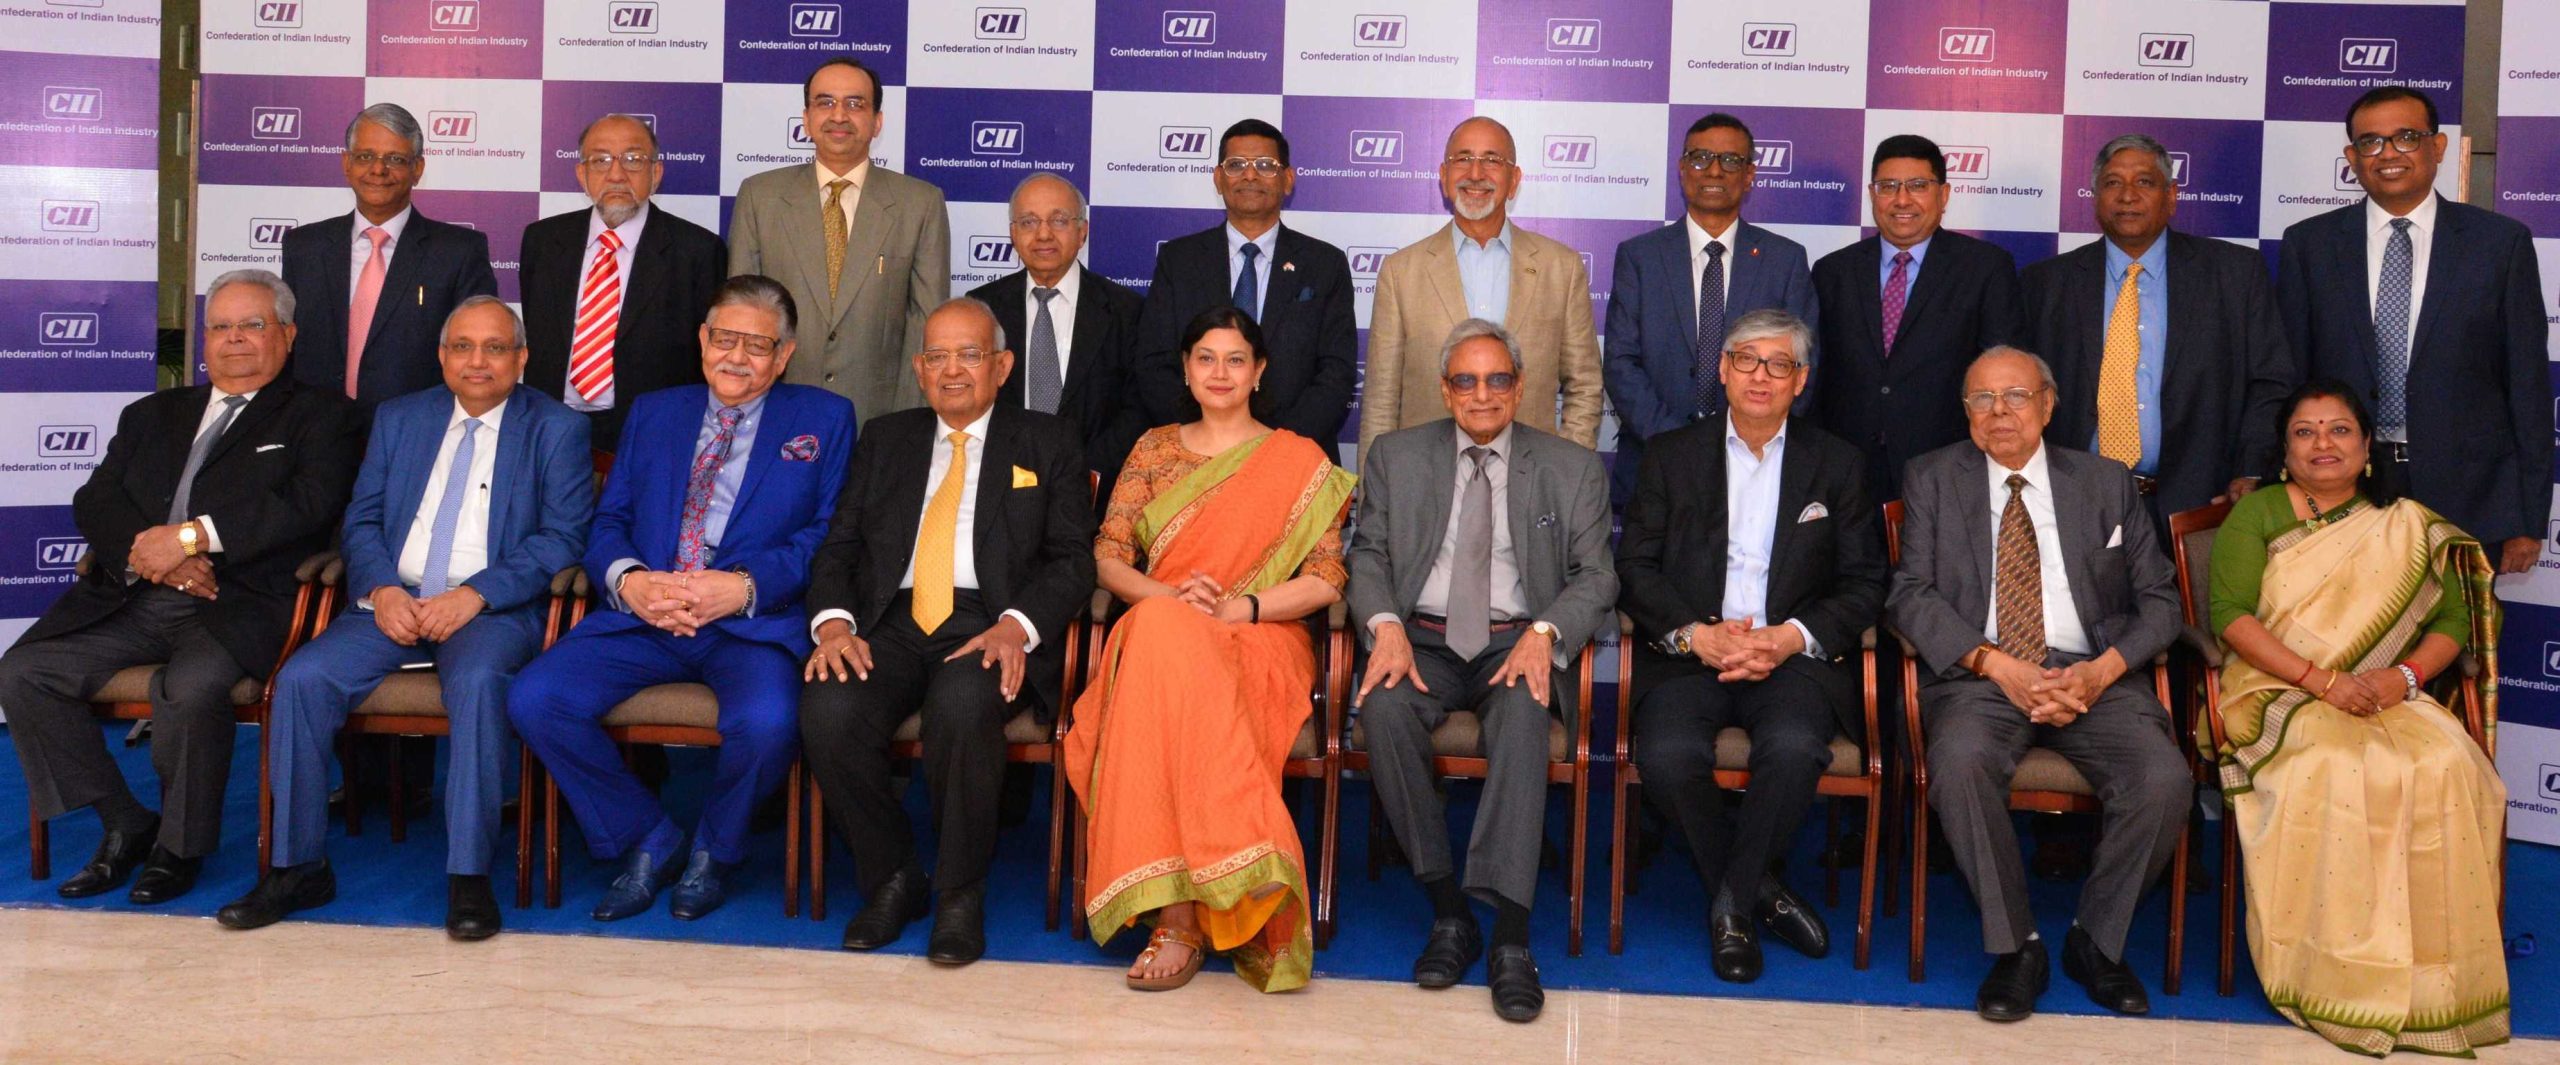 Industry stalwarts at the CII Annual General Meeting in Kolkata